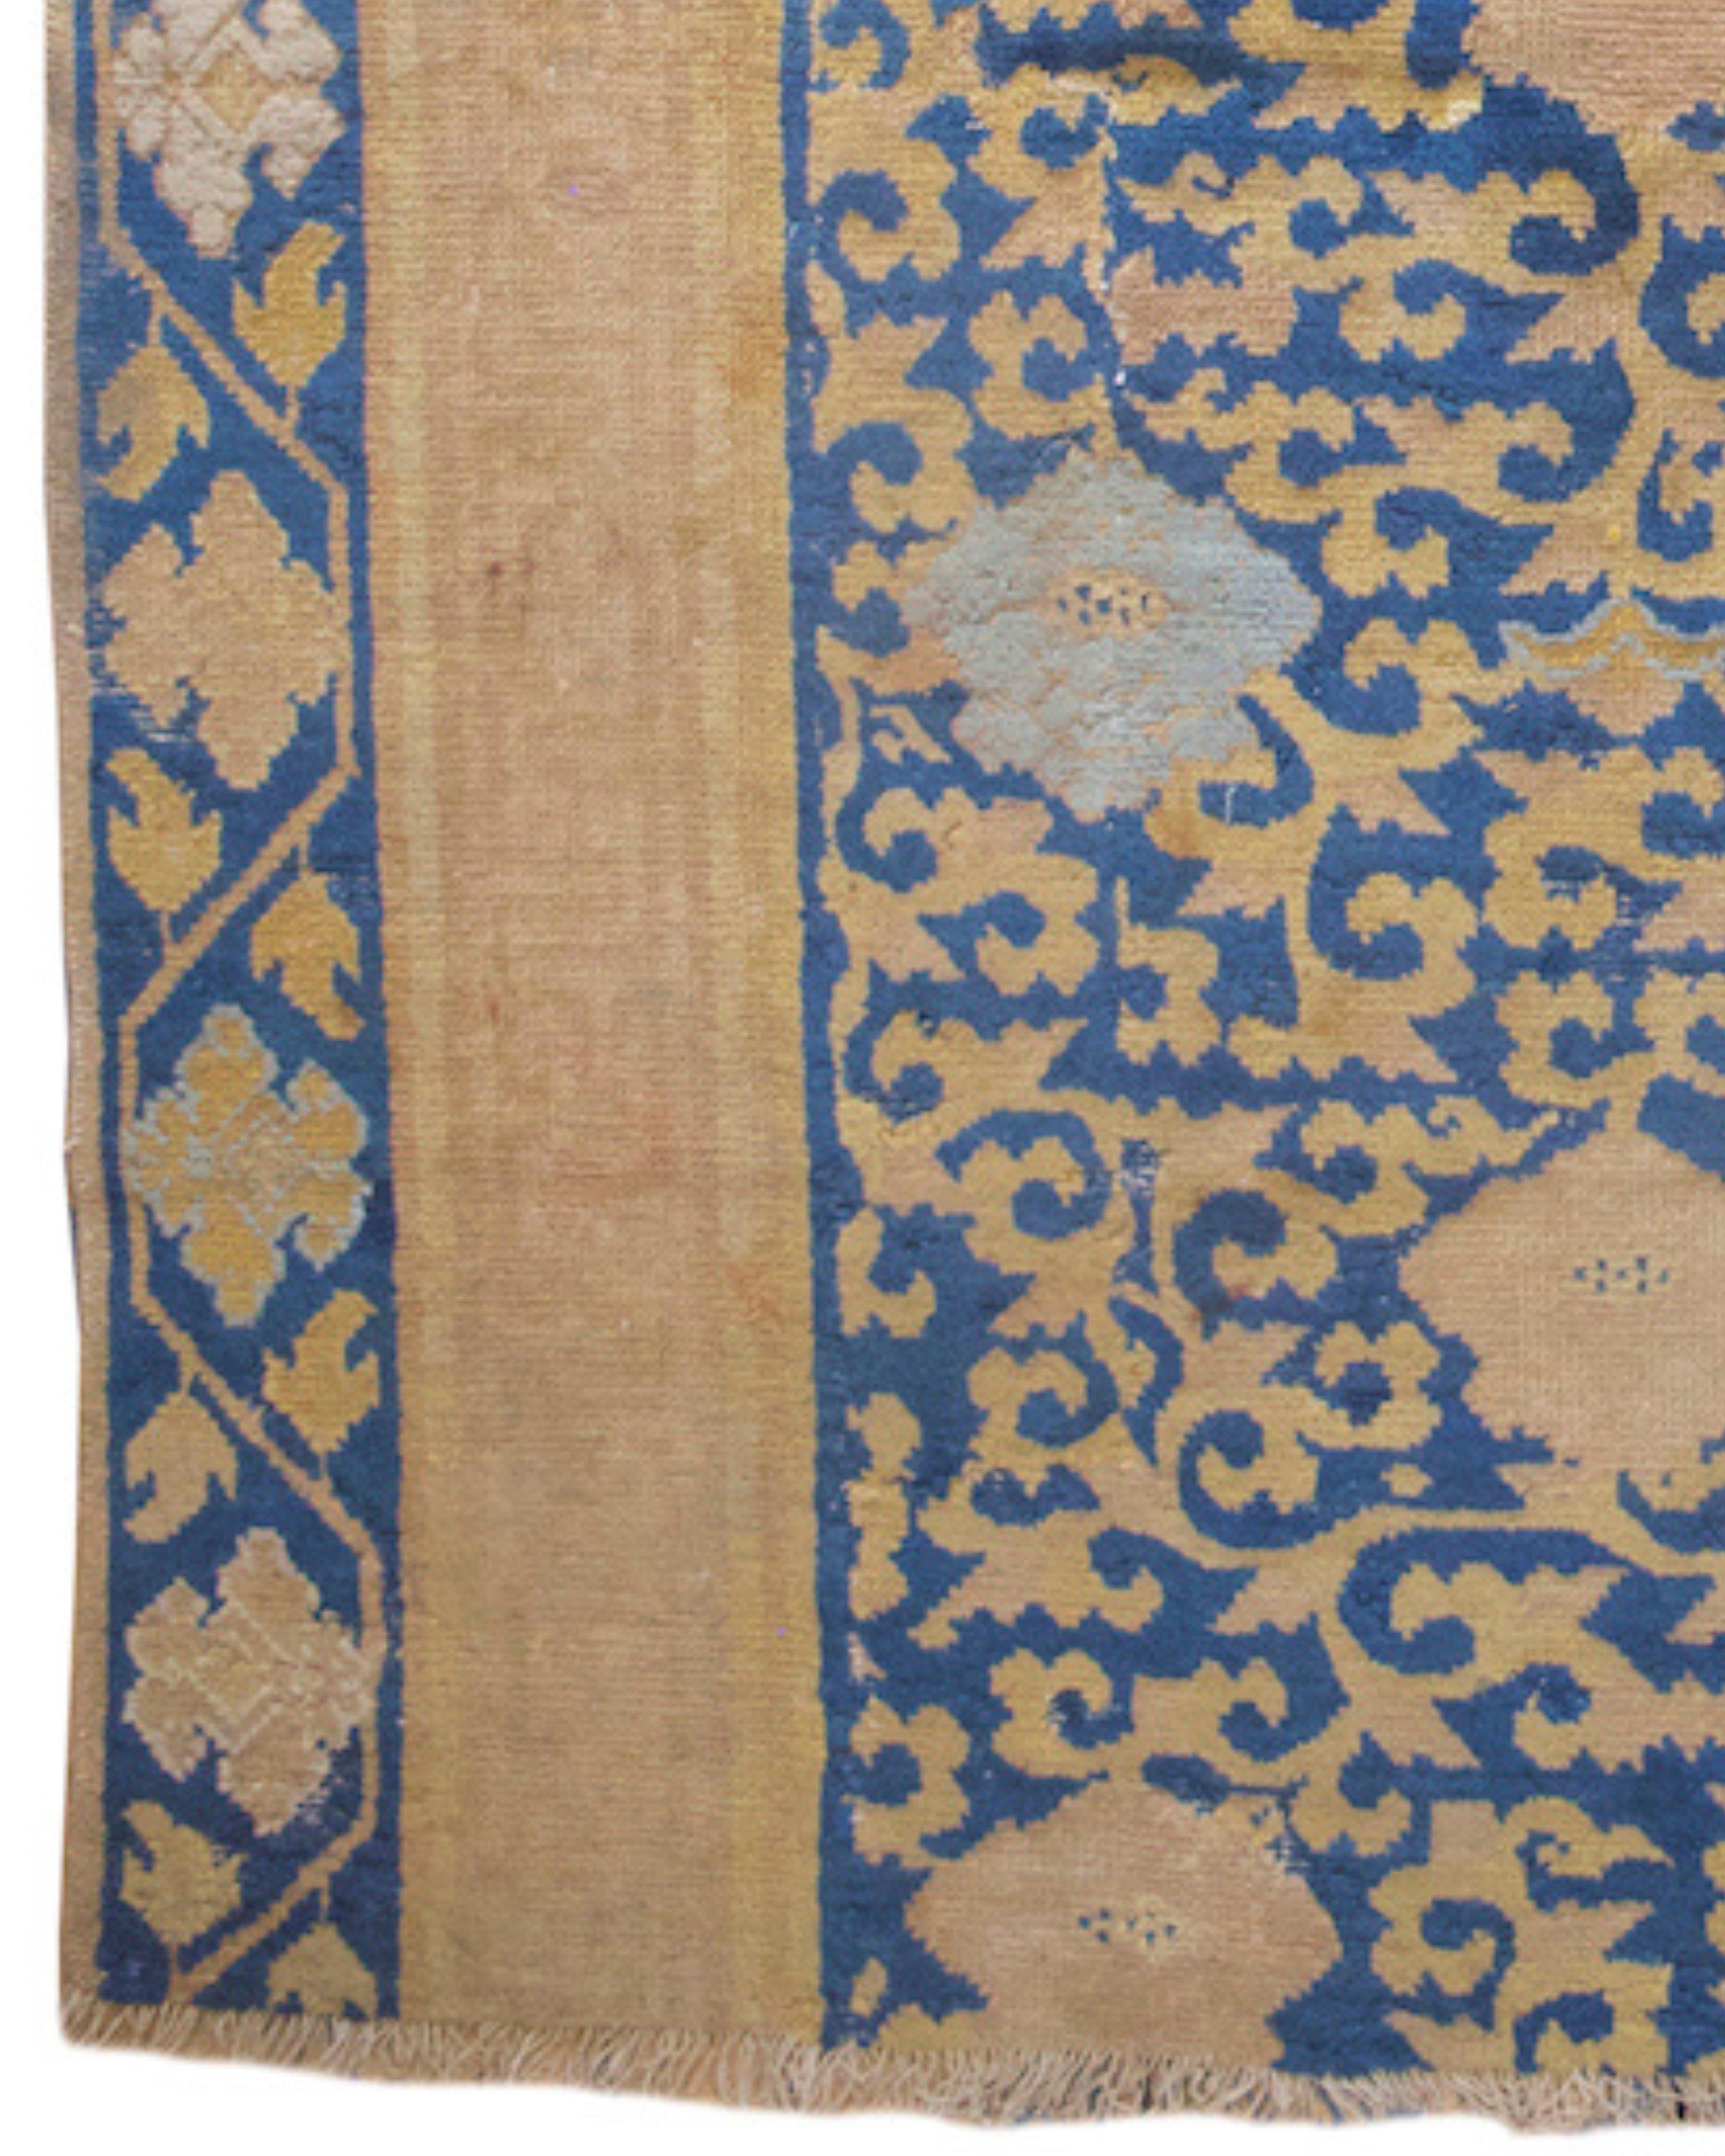 Wool Antique Chinese Kangxi Carpet Fragment, 17th Century  For Sale